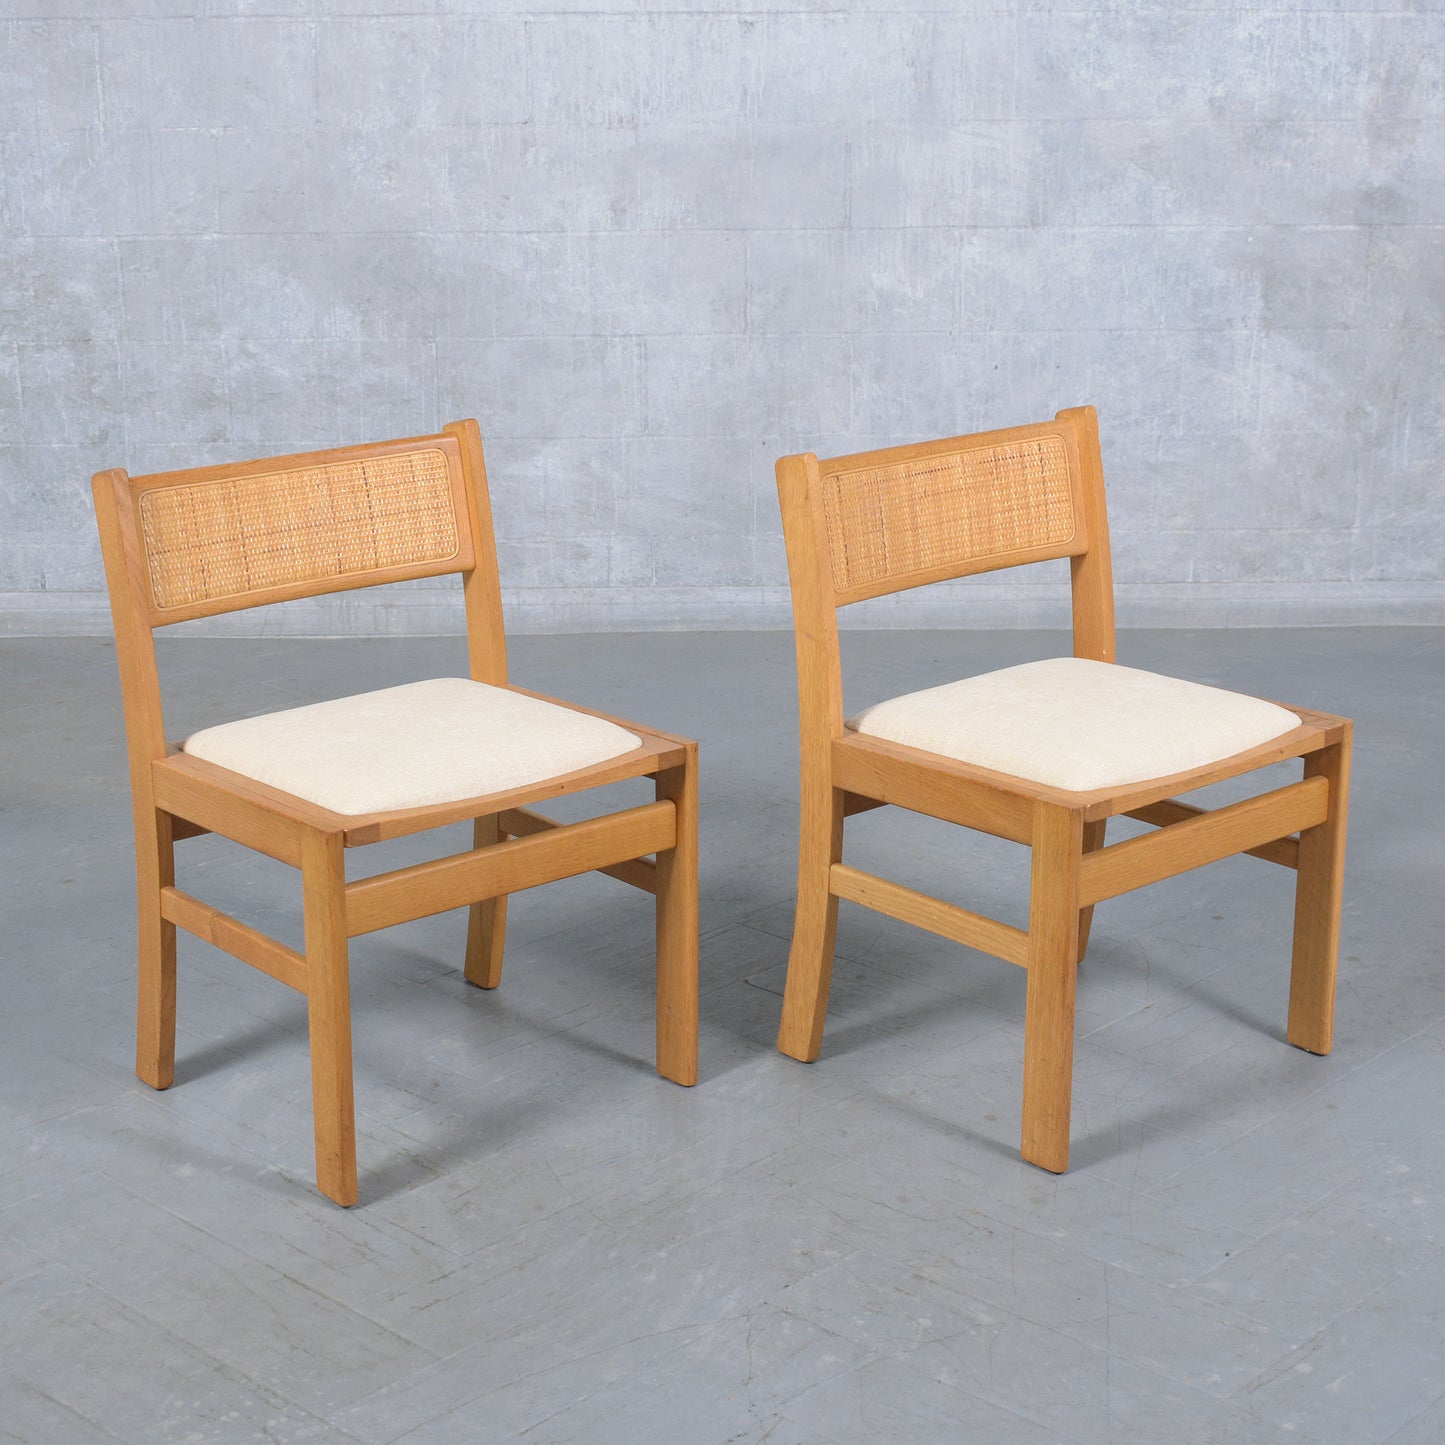 Set of Six Modern Danish Teak Dining Chairs: Mid-Century Elegance Restored